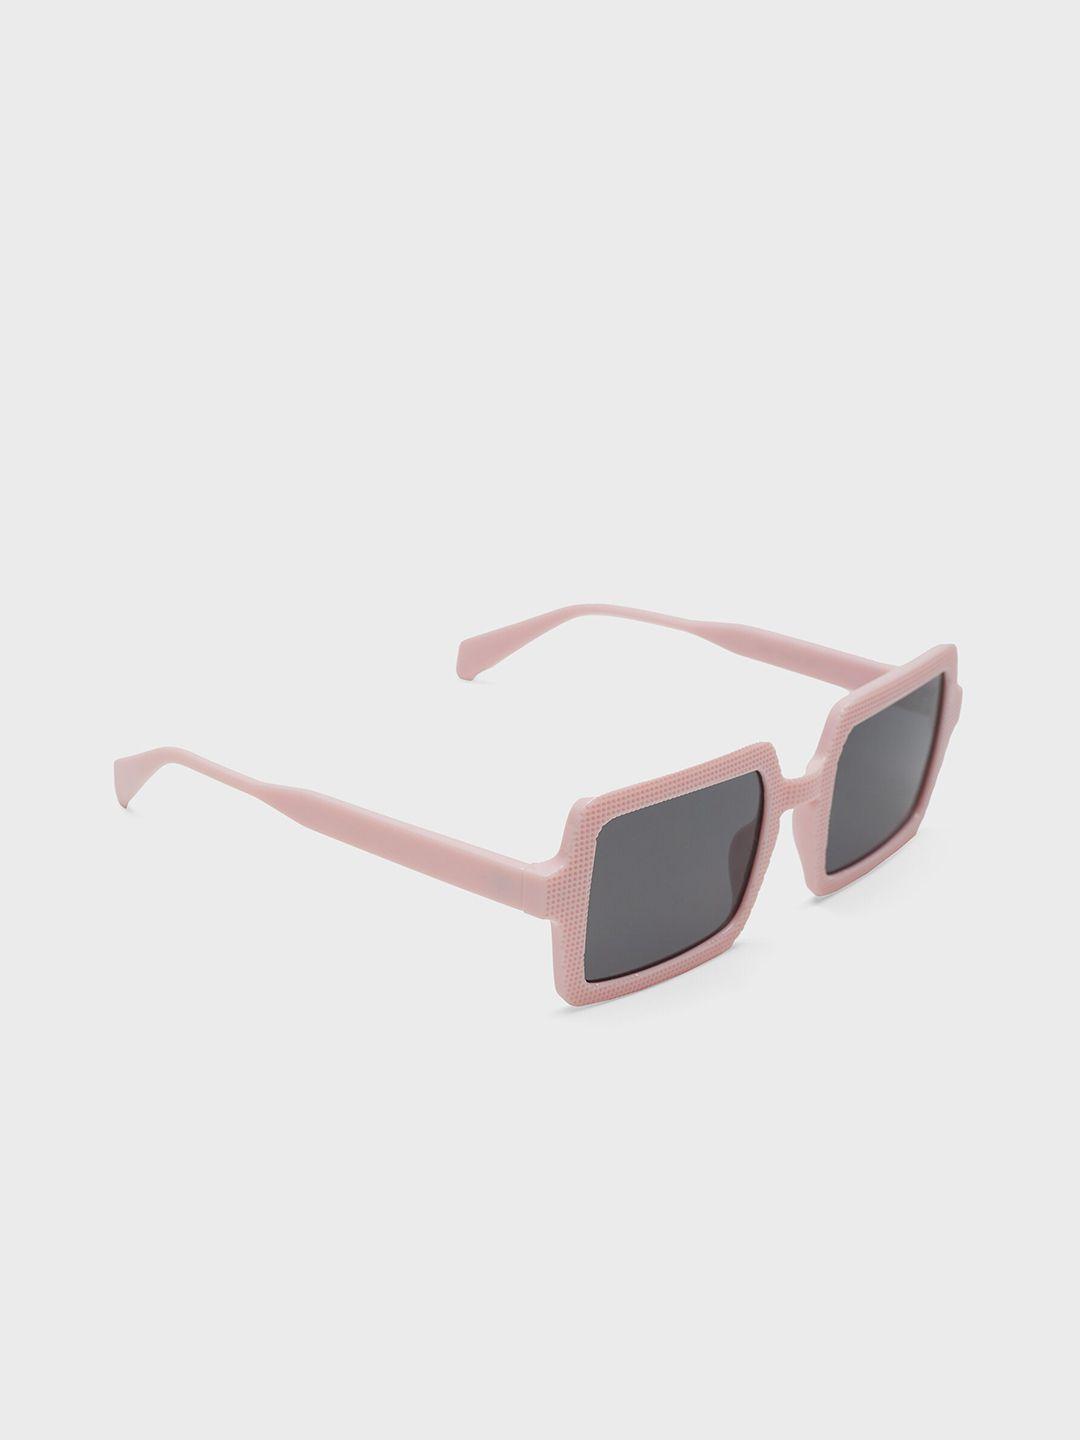 20dresses women rectangle textured acrylic sunglasses with regular lens sg010788